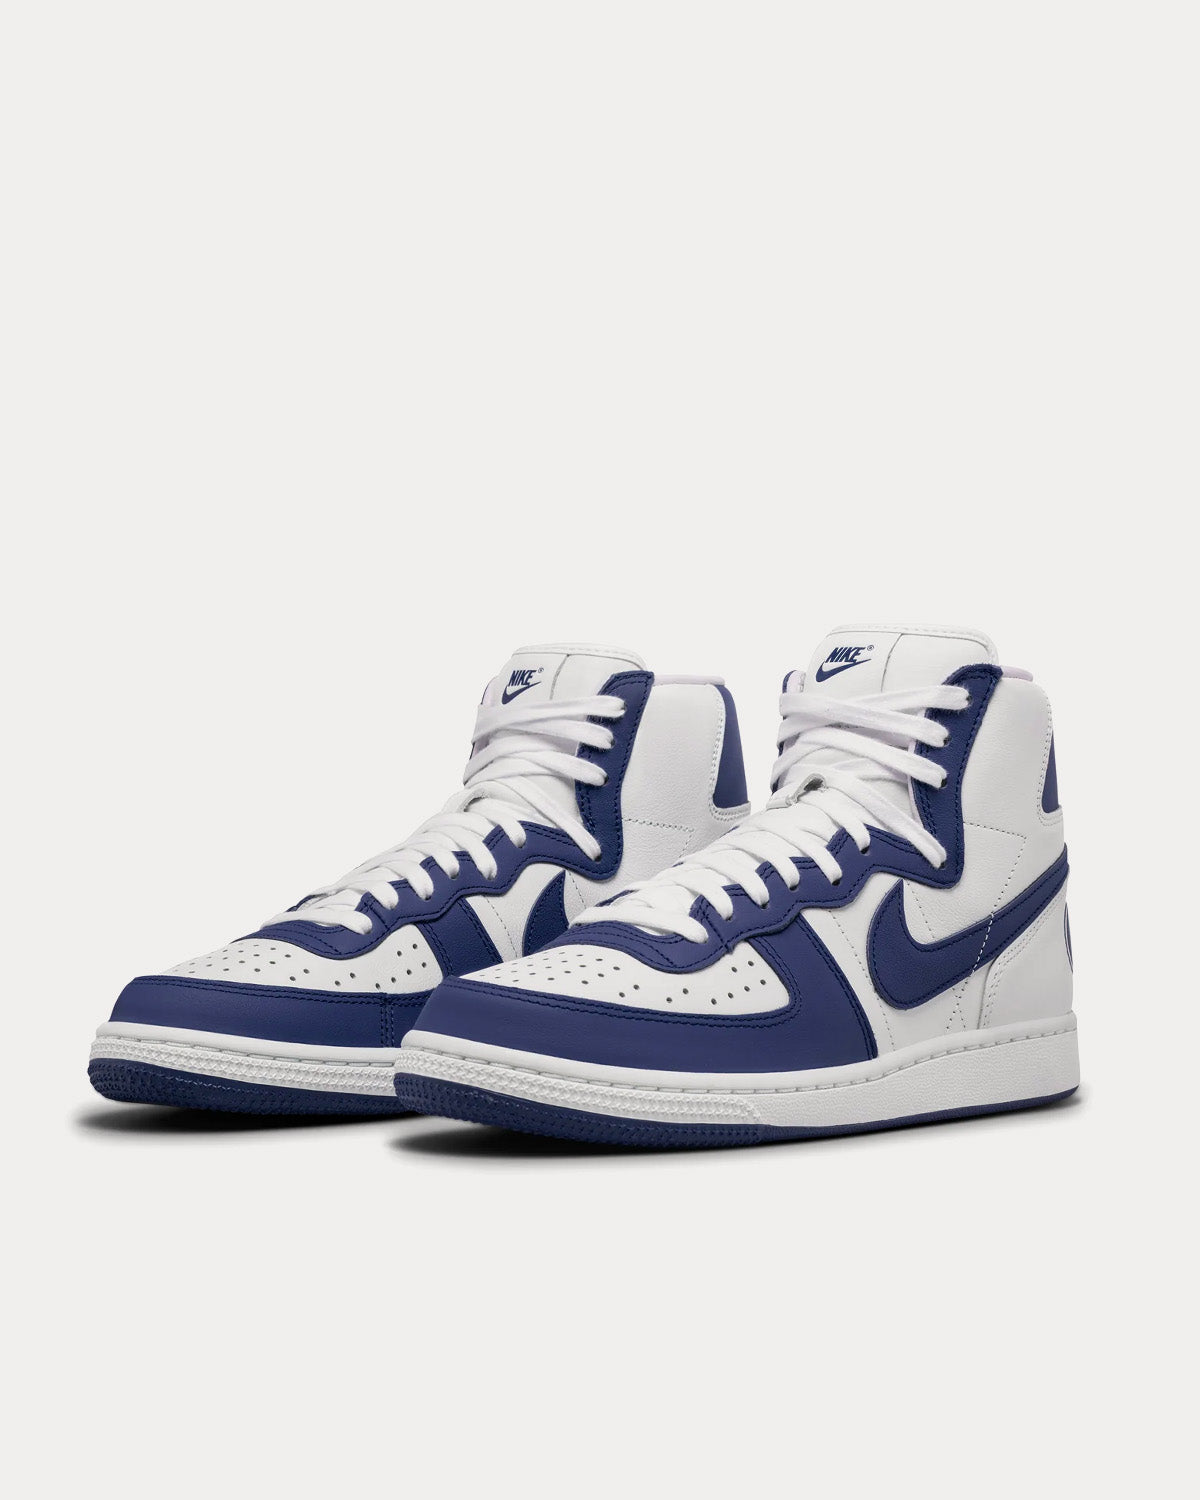 Nike x Comme des Garçons - Terminator Blue / White High Top Sneakers